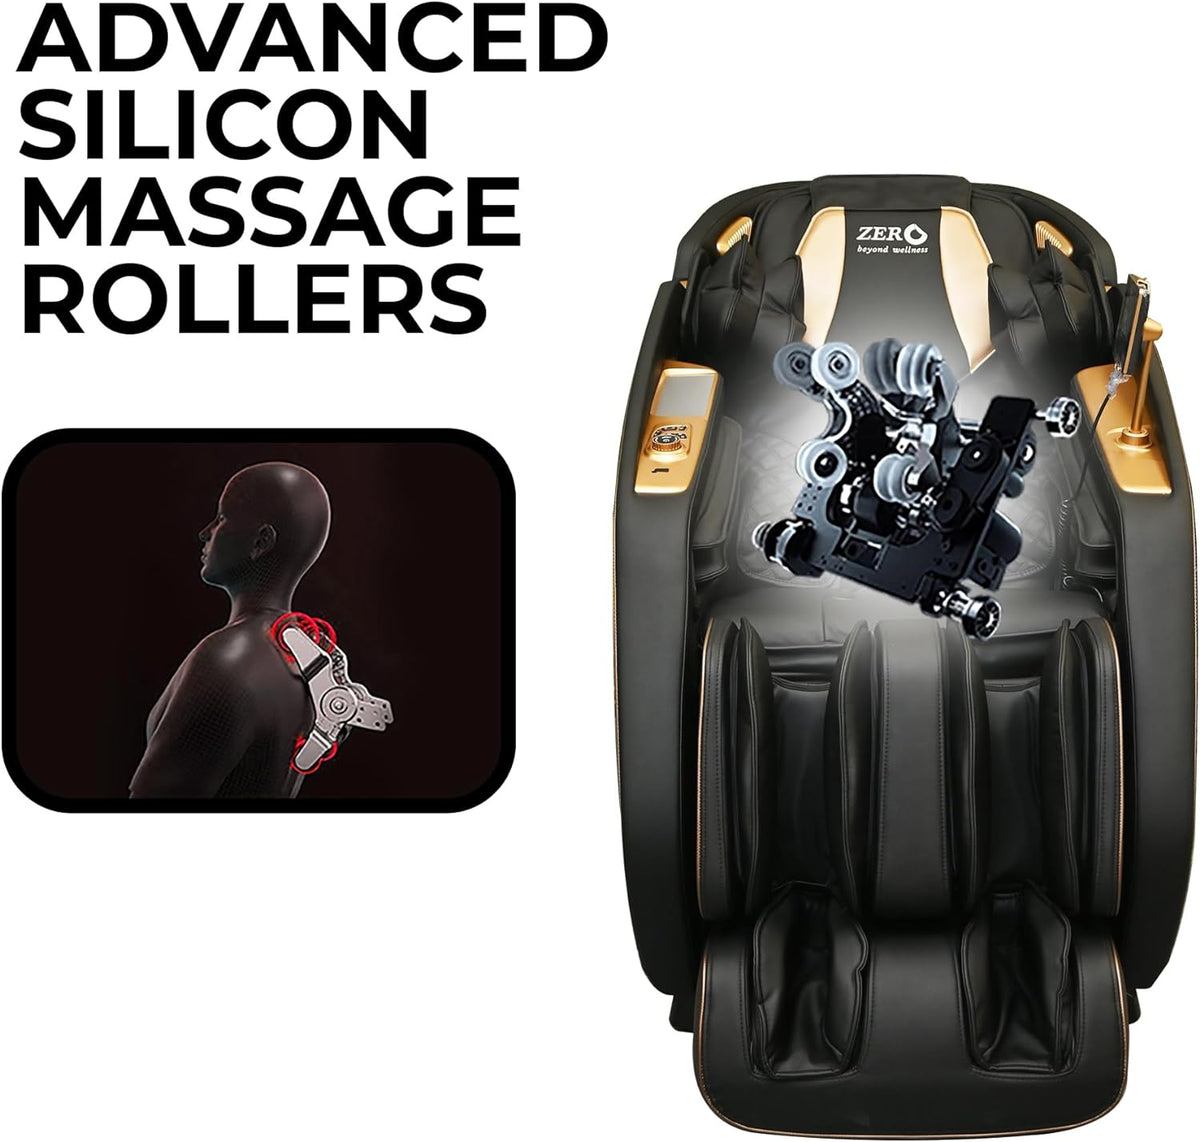 U-Soul Massage Chair